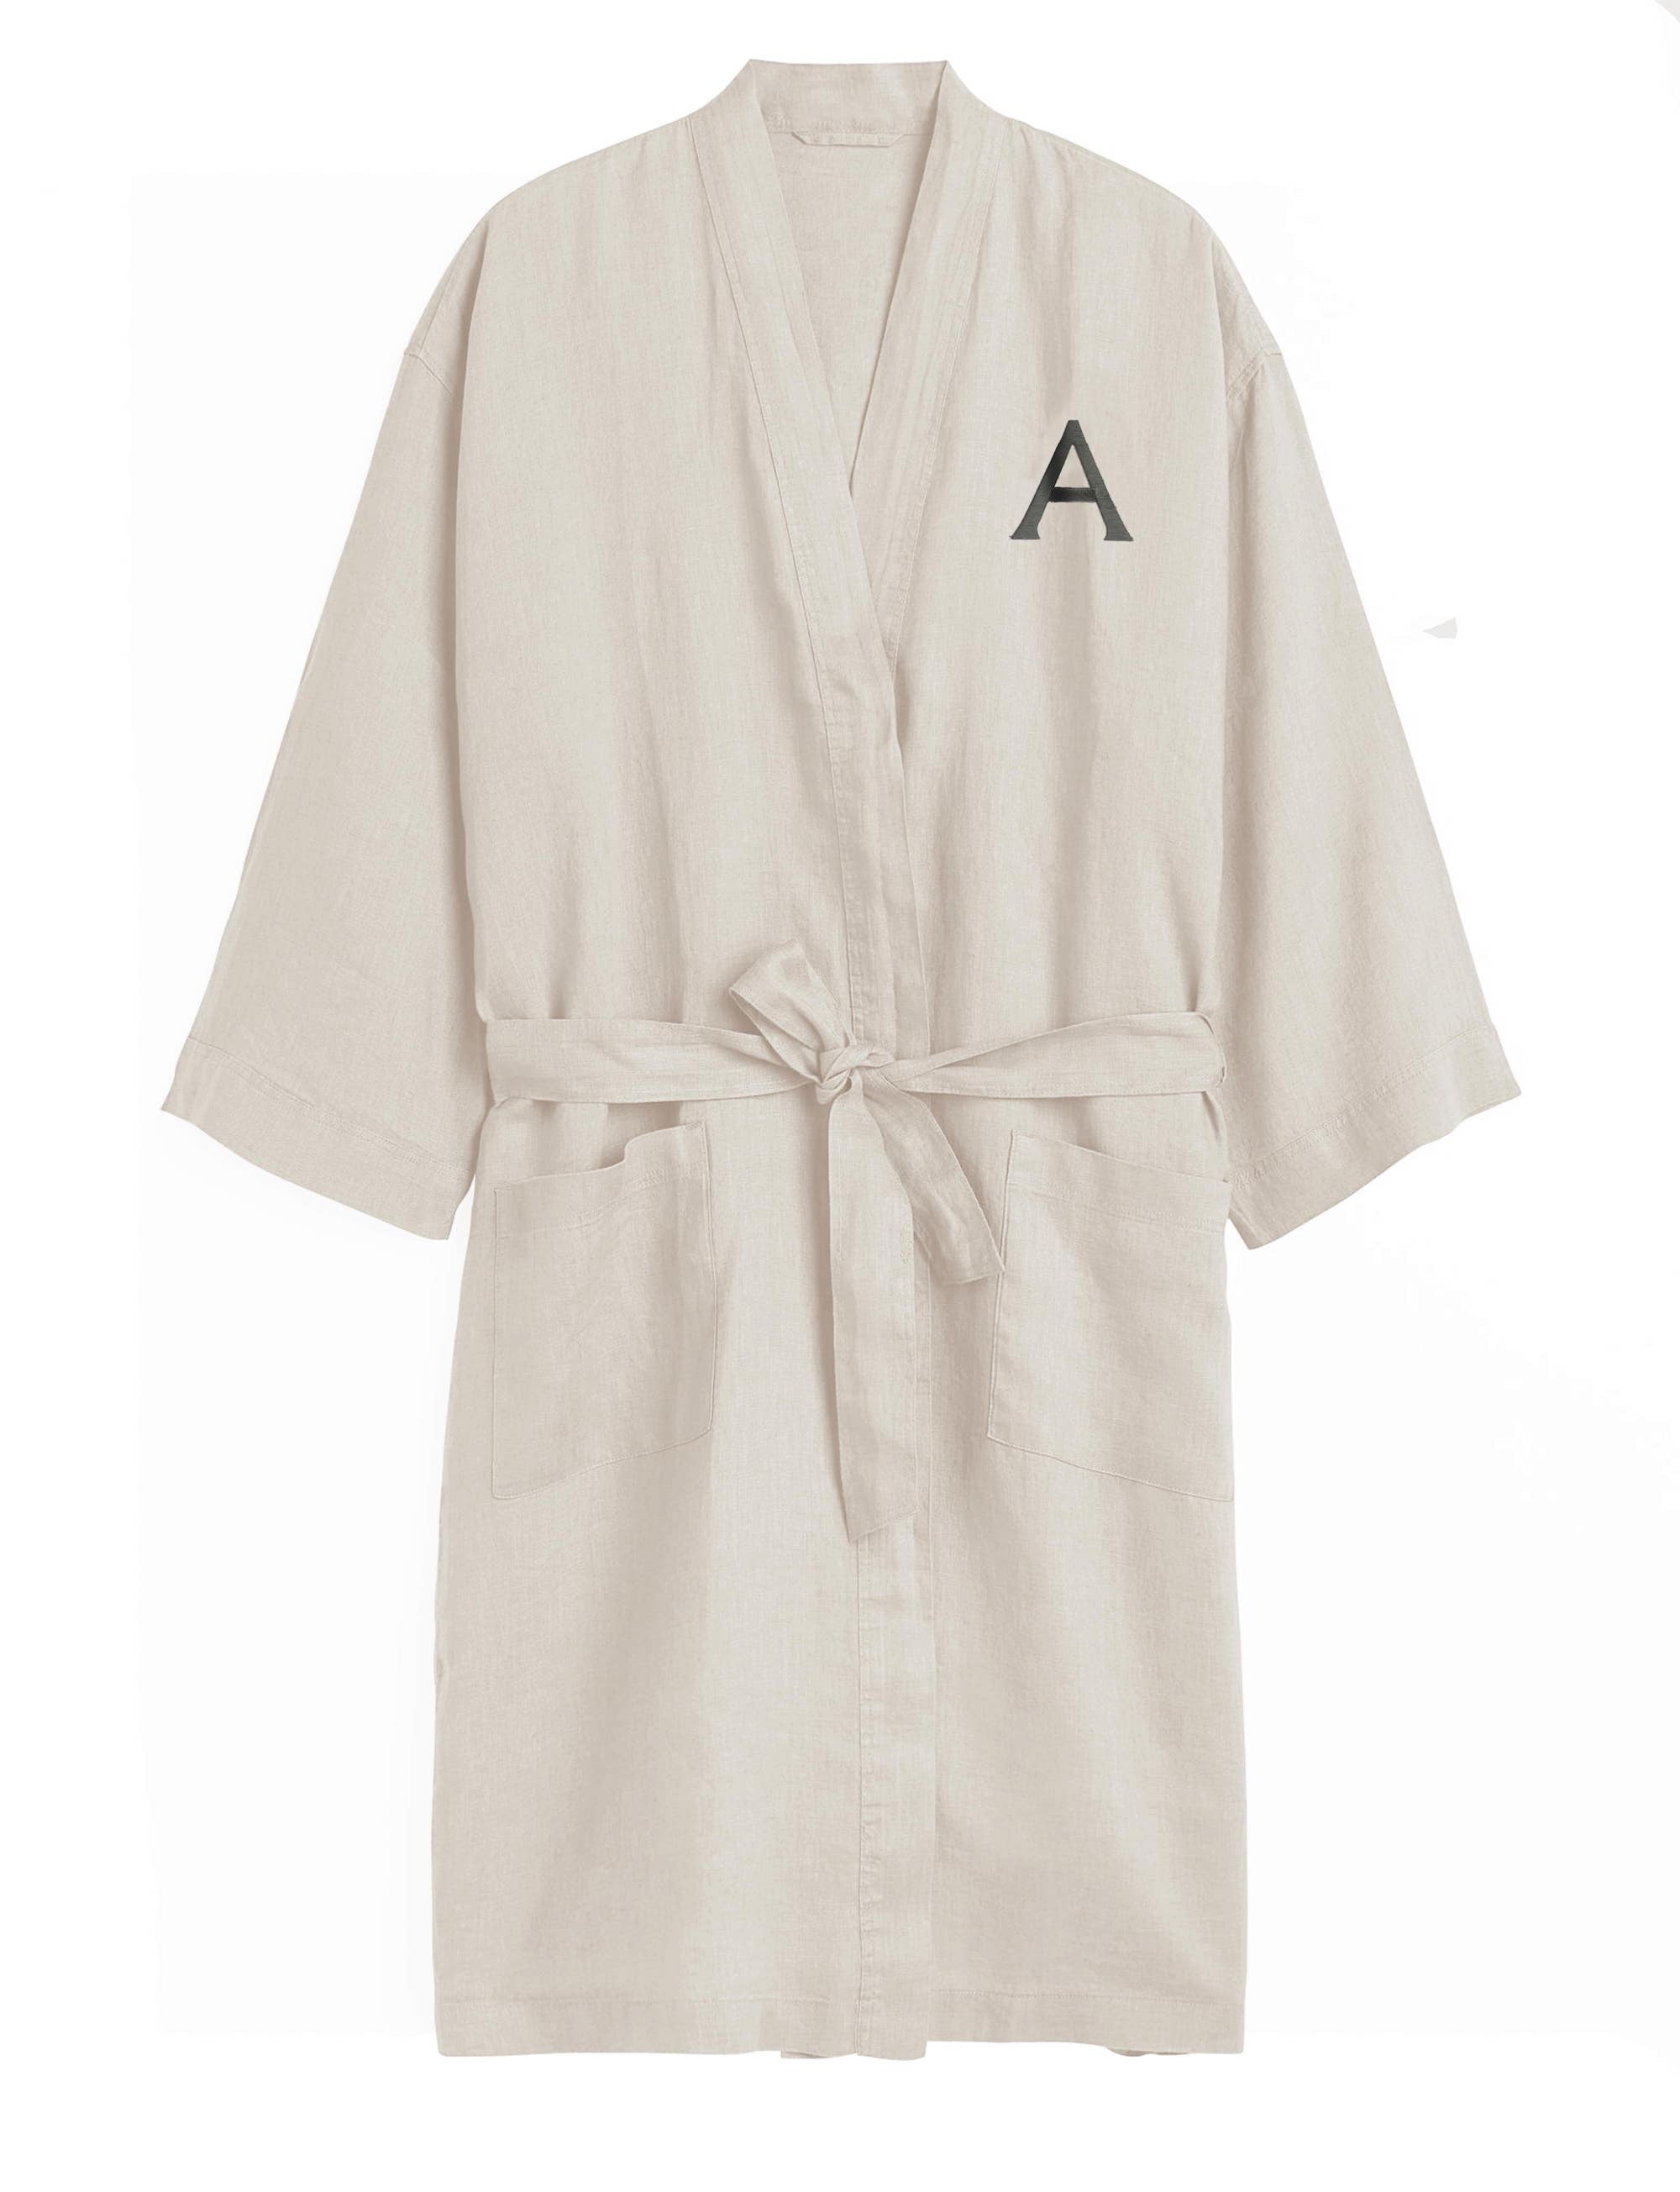 Men's Women's Monogrammed Linen Bath Robe Unisex Loungewear with Initials